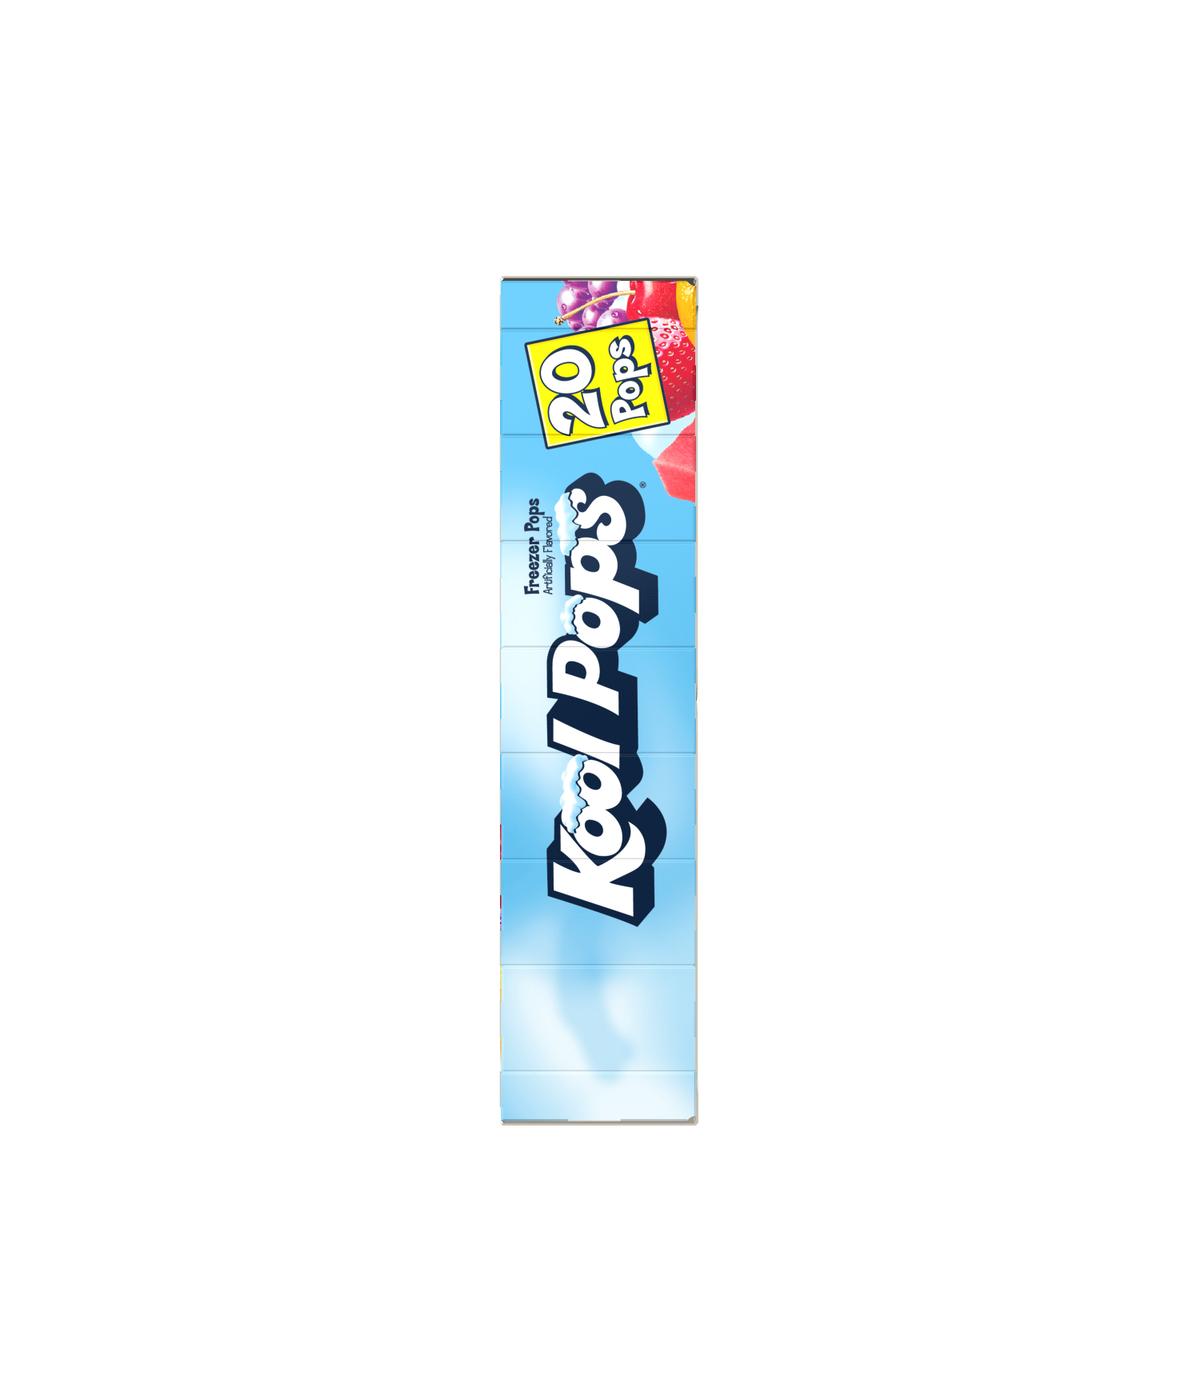 Kool Pops Freezer Bars - Assorted Flavors; image 3 of 4